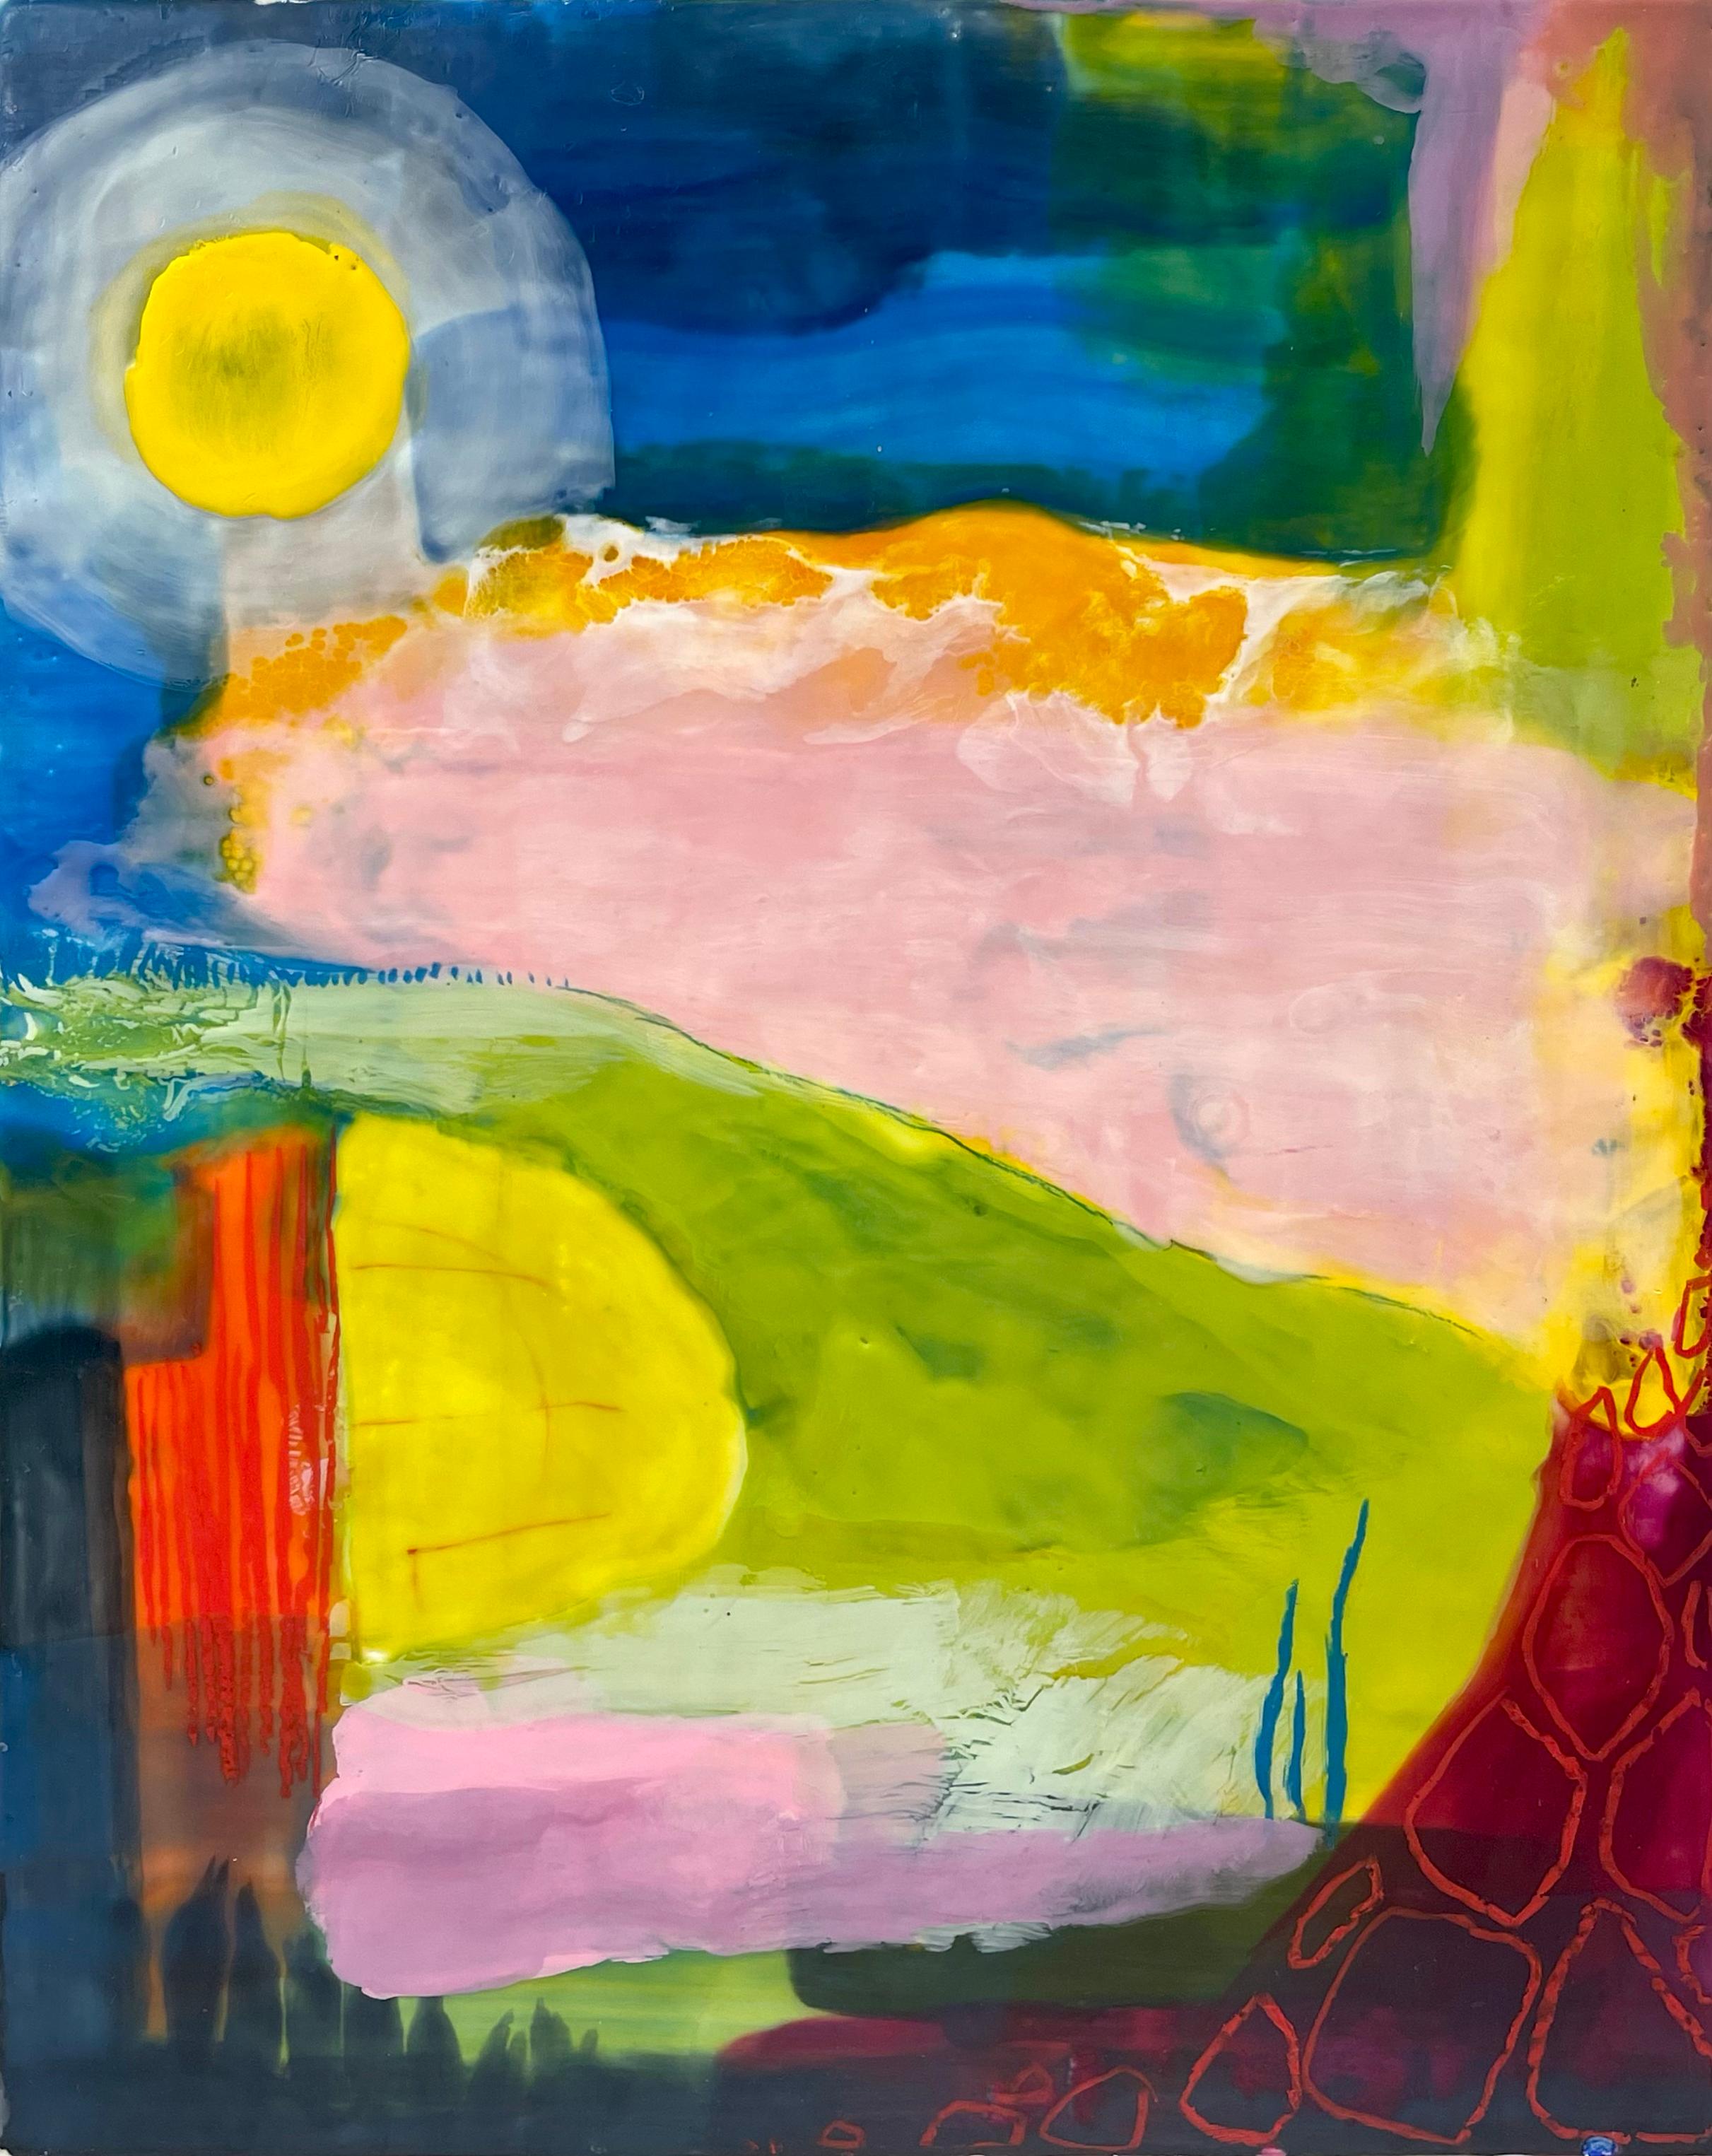 Kate Snow Landscape Painting - Summer Dream, impressionistic landscape painting